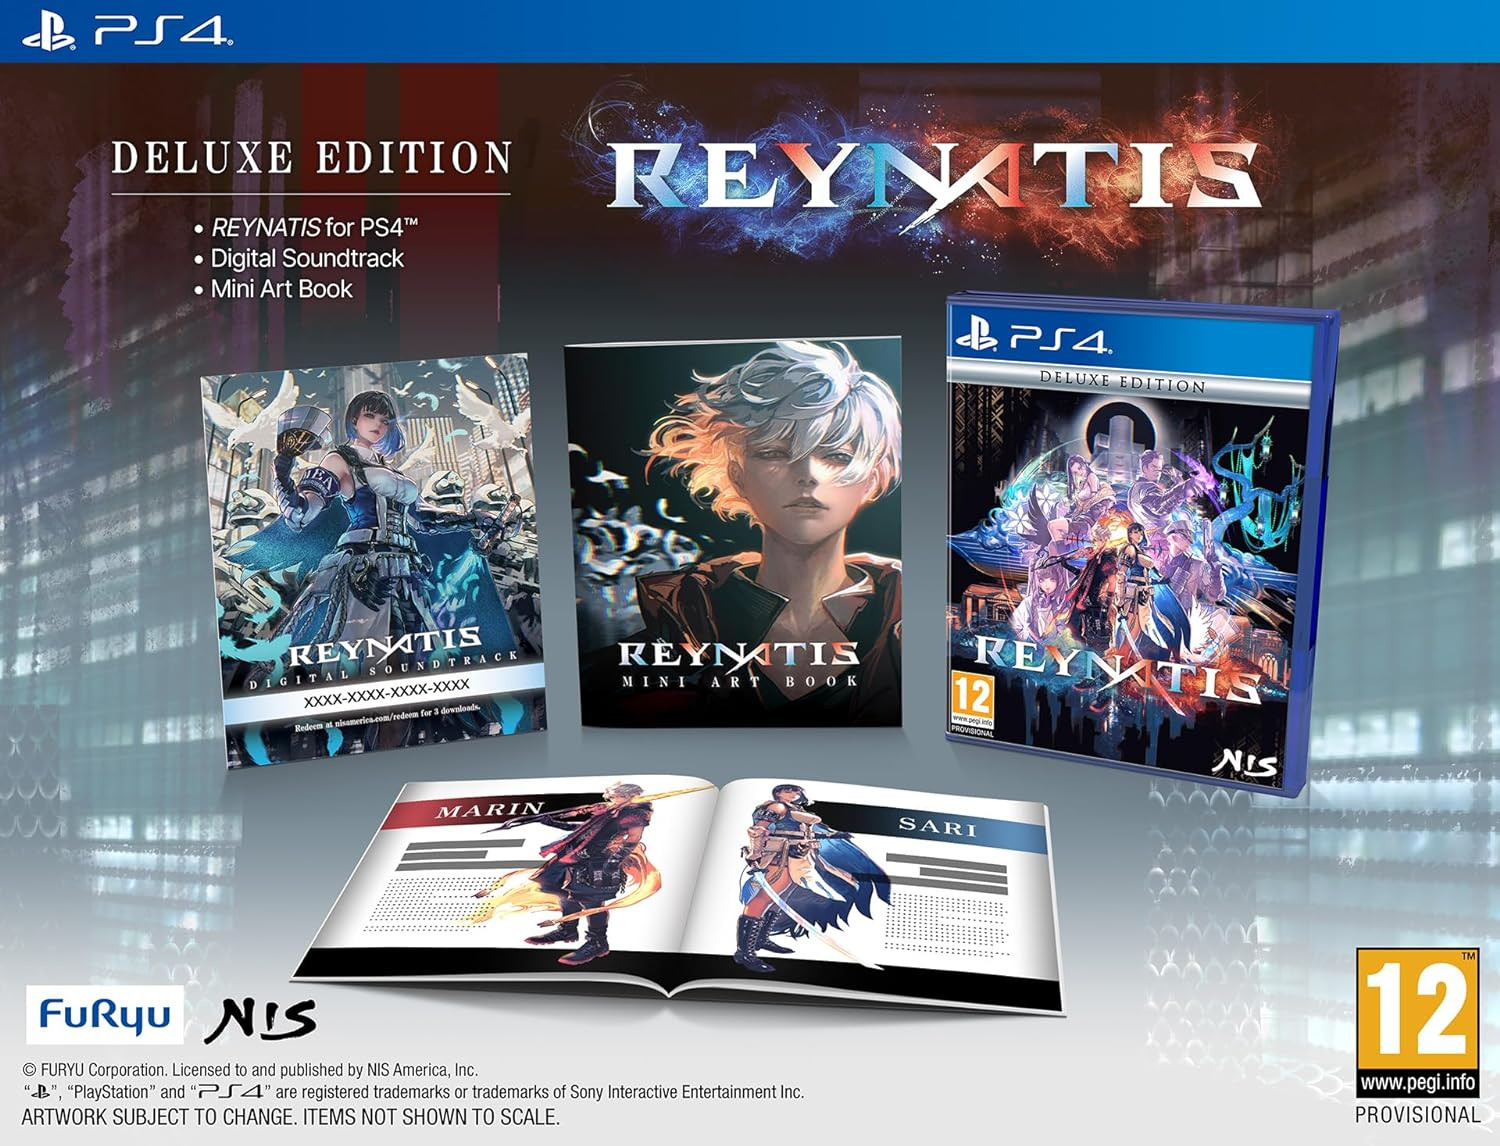 Reynatis - Deluxe Edition (PS4), NIS America